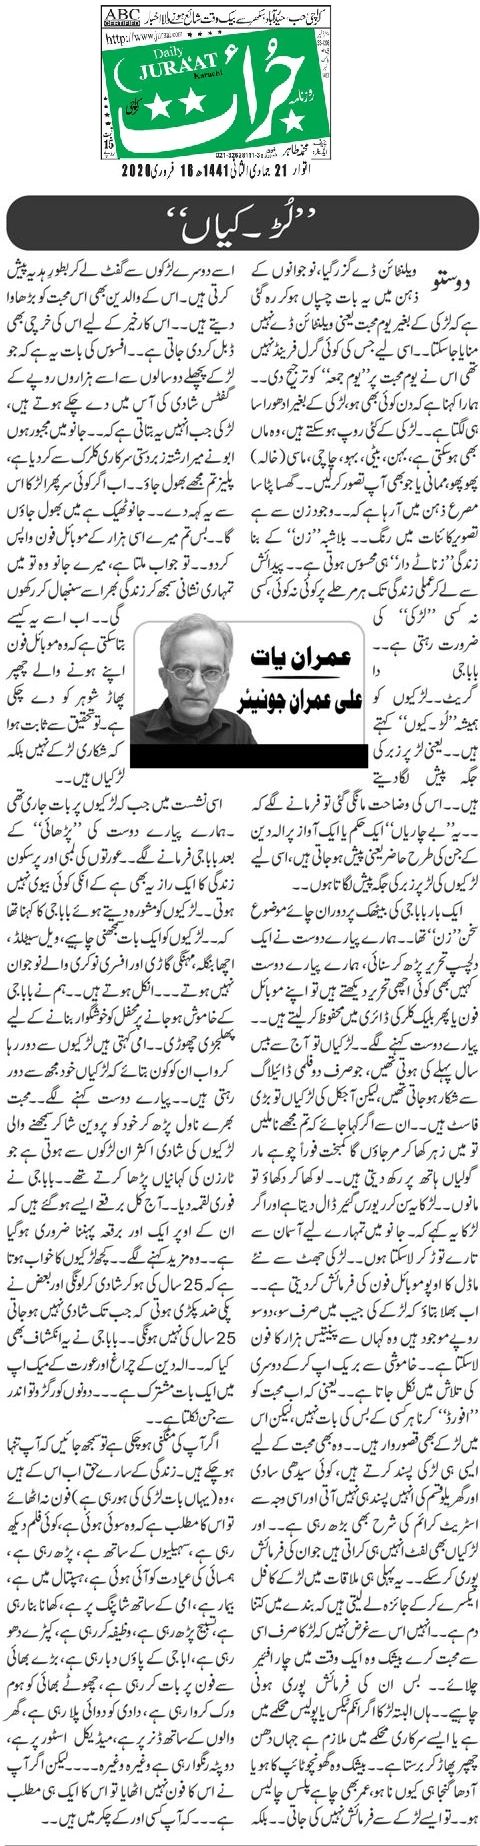 Lur Kiyan by Ali Imran Junior Imran Yaat Daily Jurrat